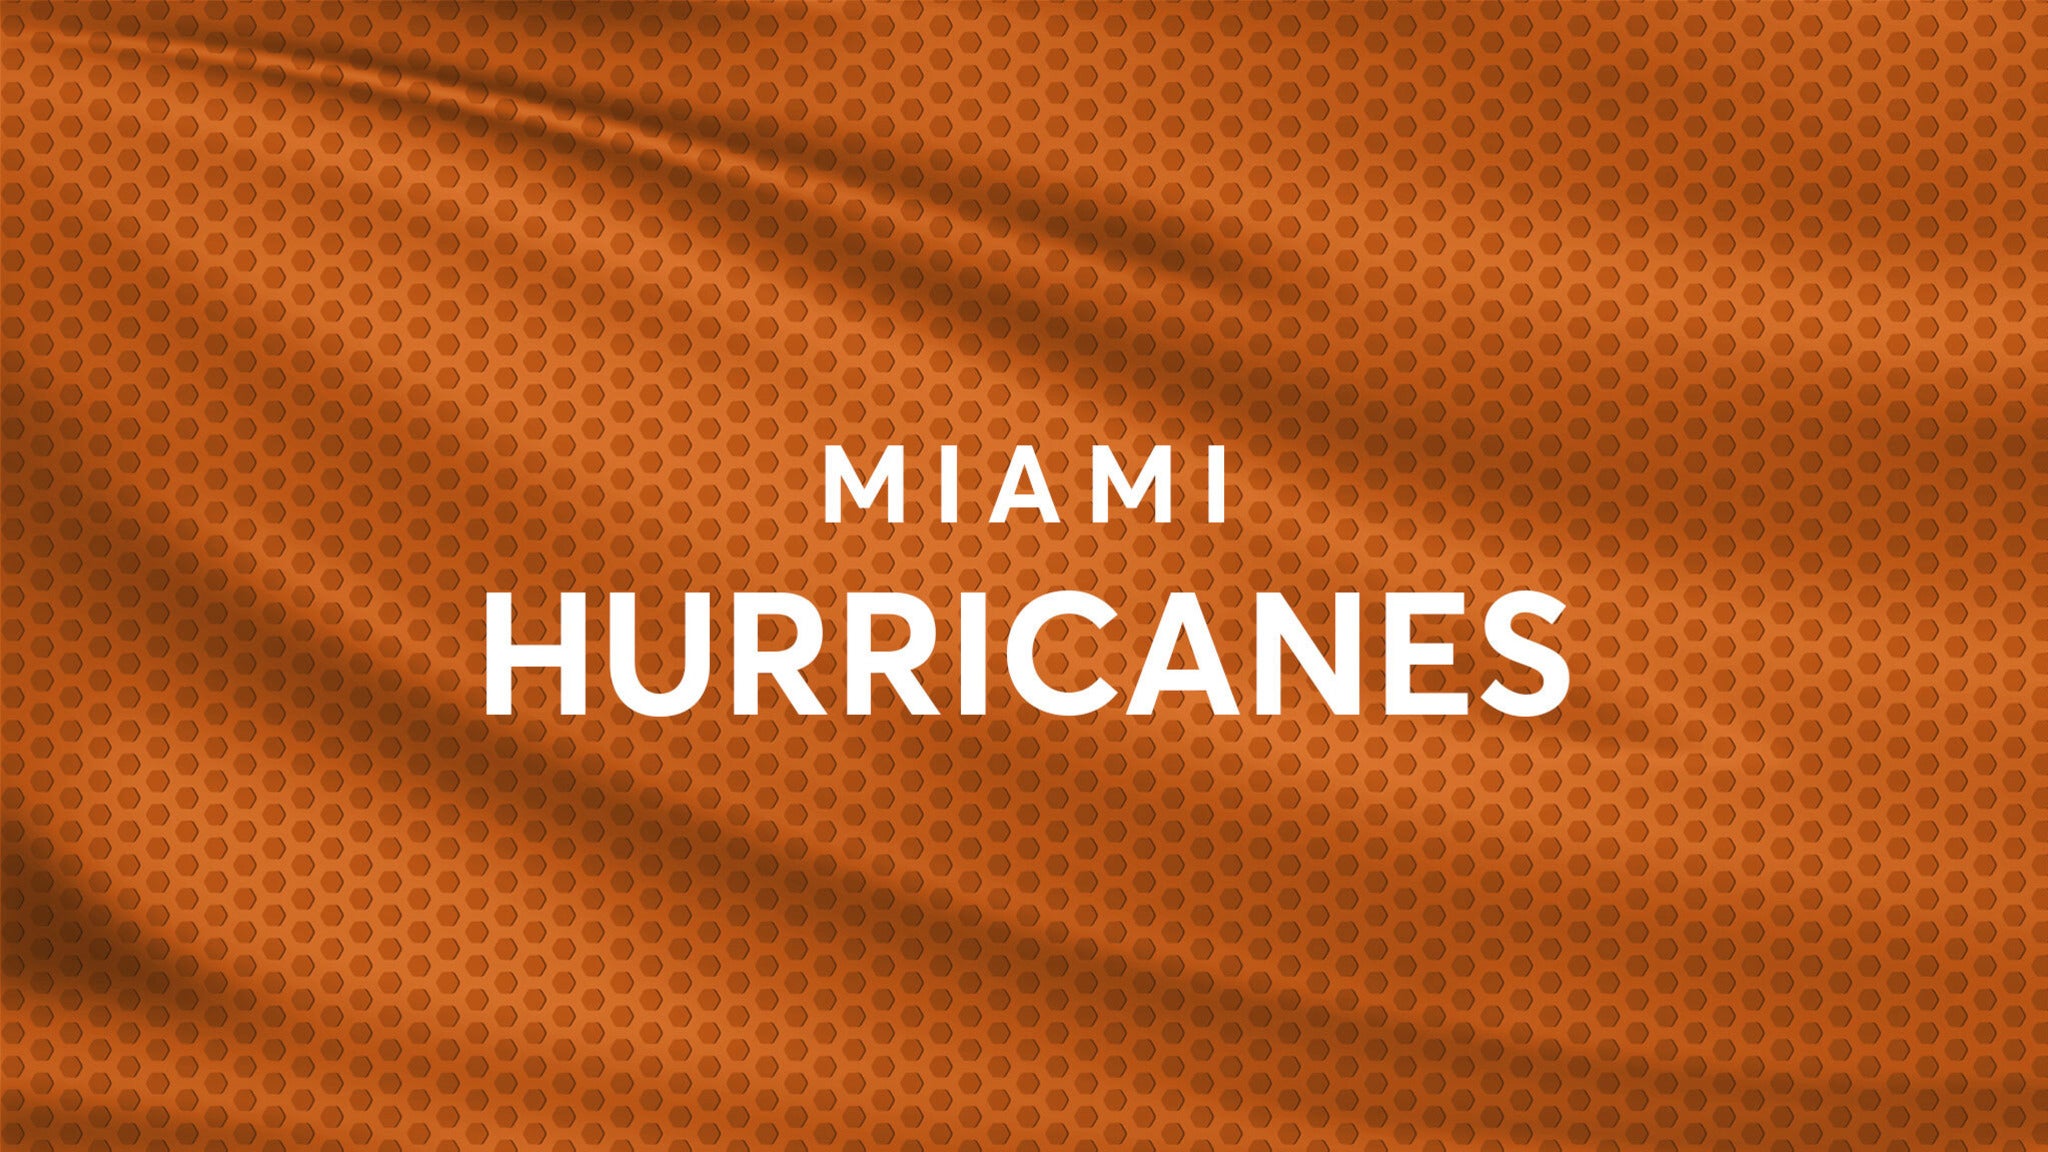 Miami Hurricanes Football vs. USM Golden Eagles Football